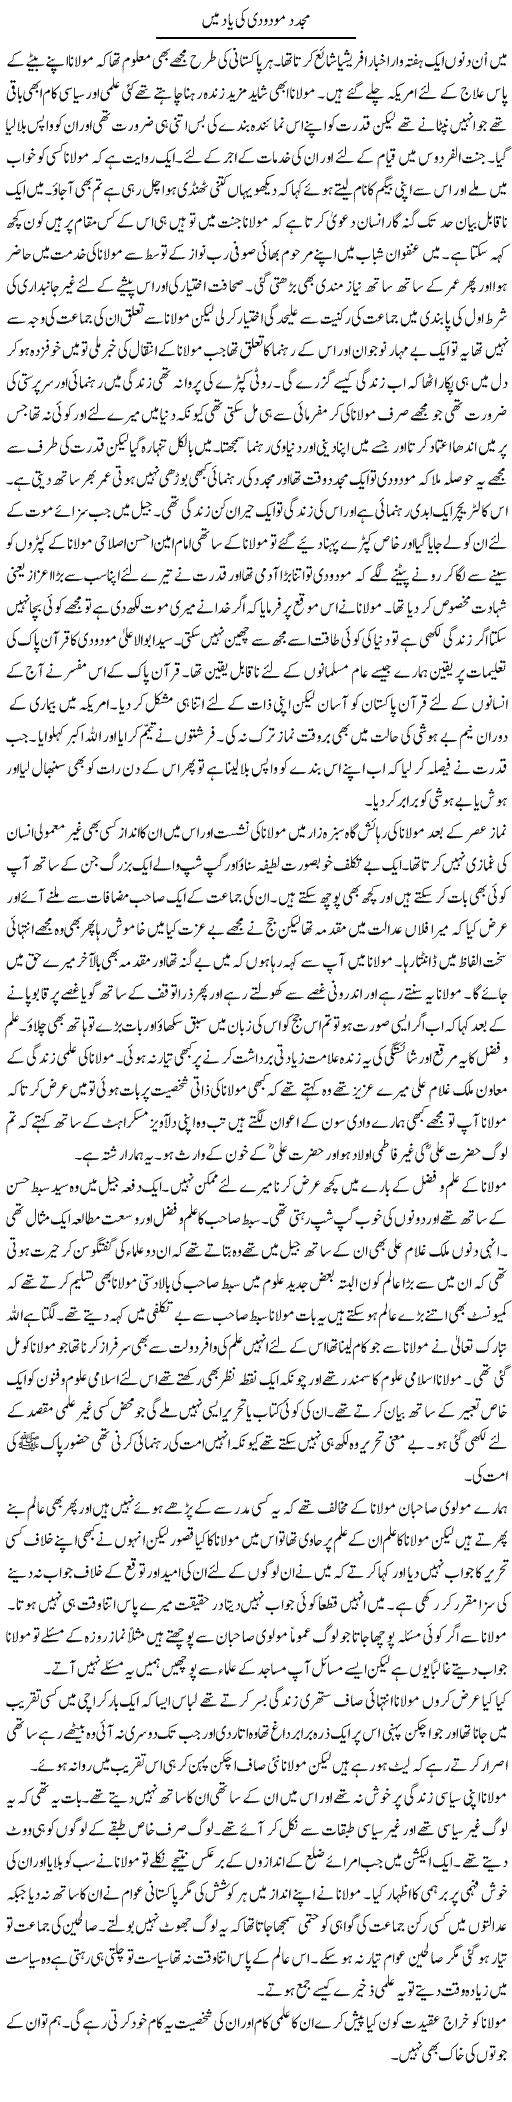 Mujadid Modudi Ki Yad Main | Abdul Qadir Hassan | Daily Urdu Columns